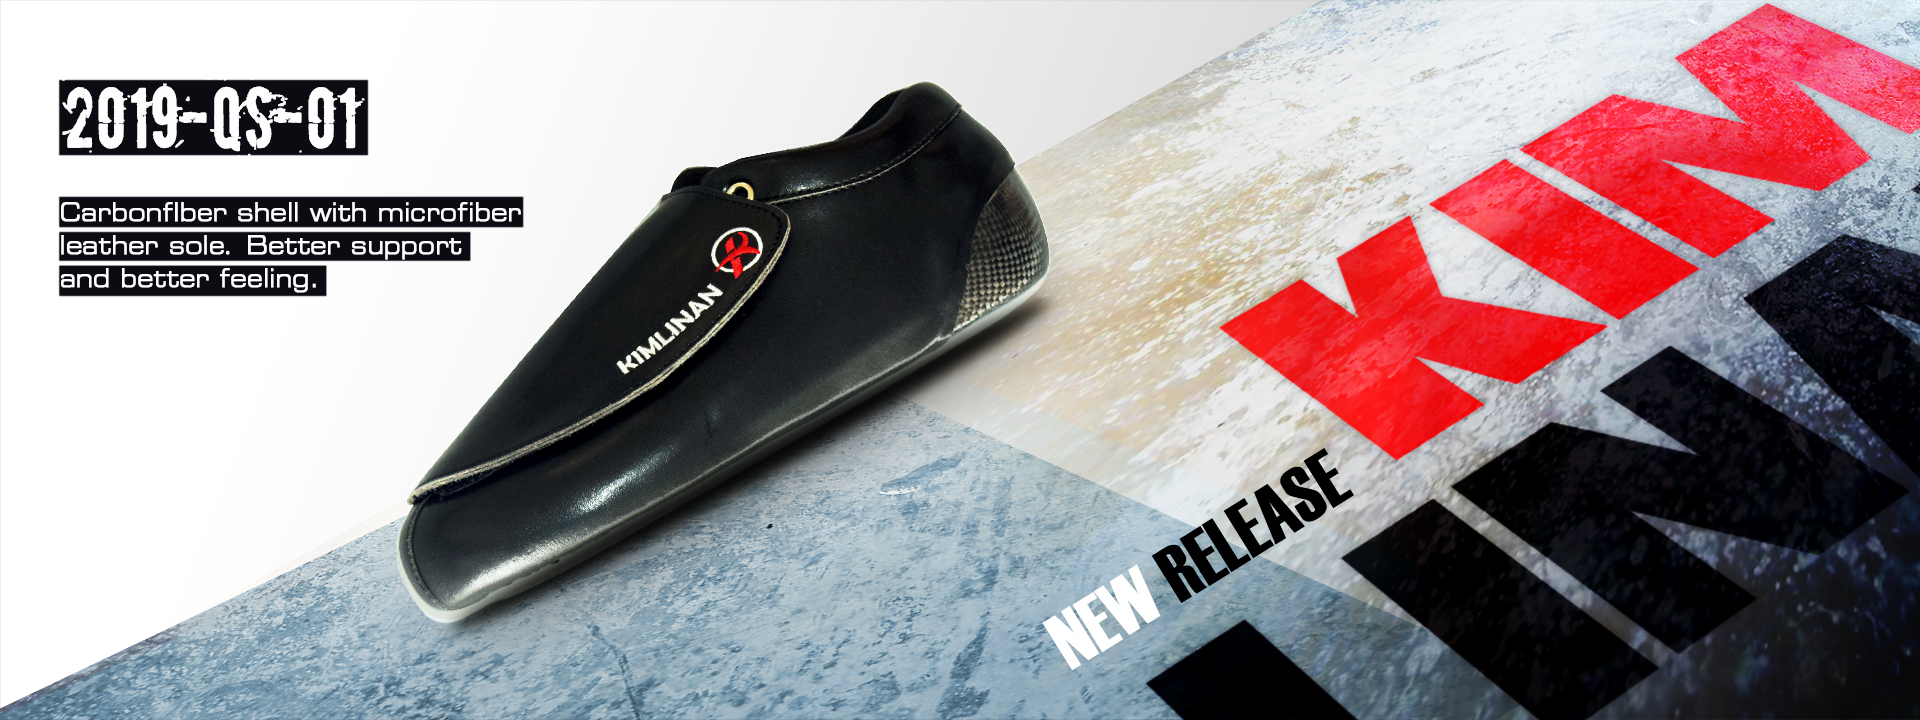 Quad Skate Boot 2019-QS-01 New release